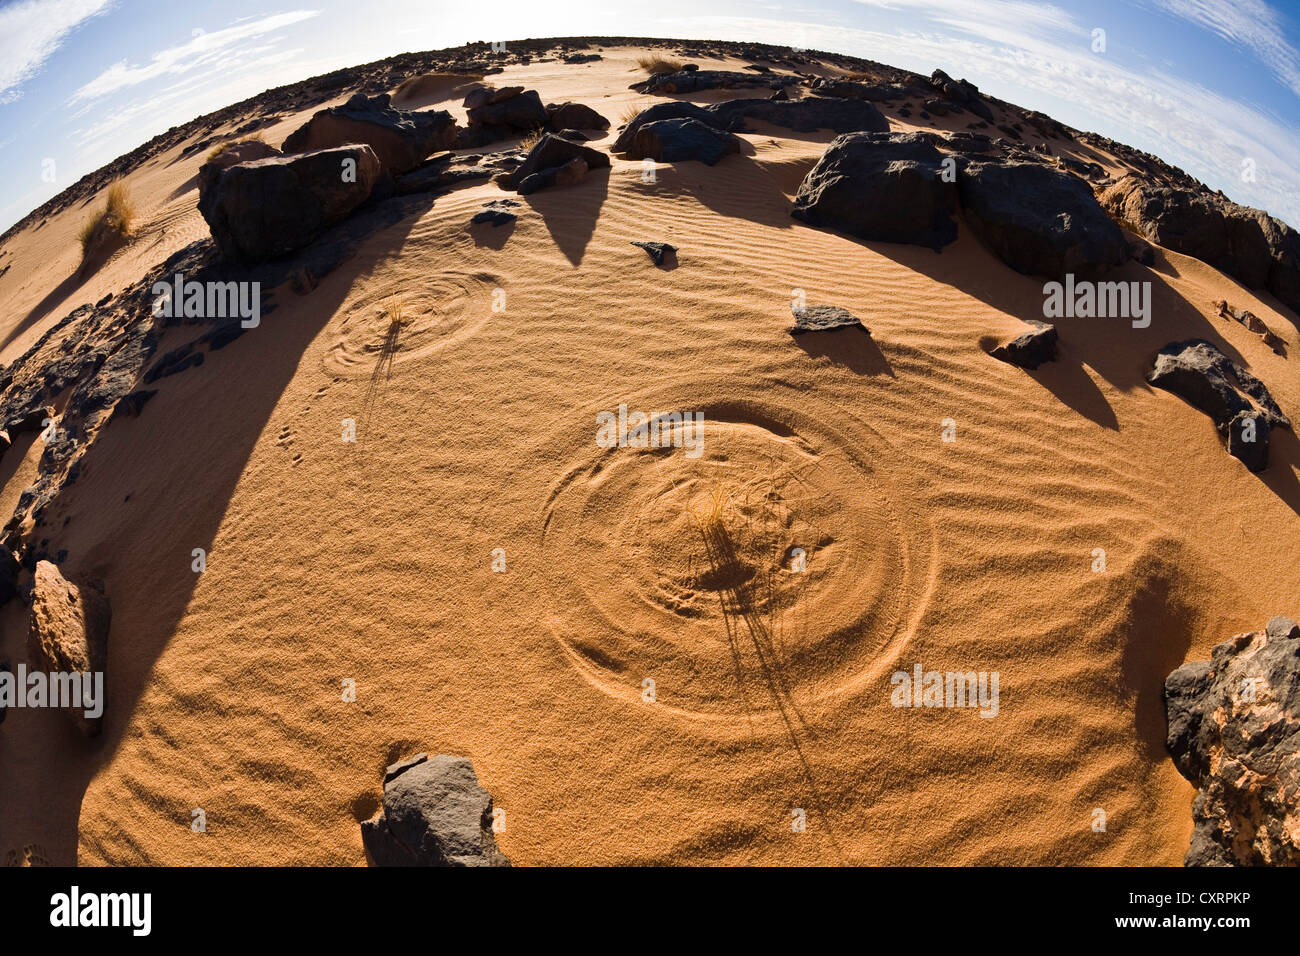 Blades of grass drawing circles in the sand, stone desert, Black Desert, Libya, Africa Stock Photo